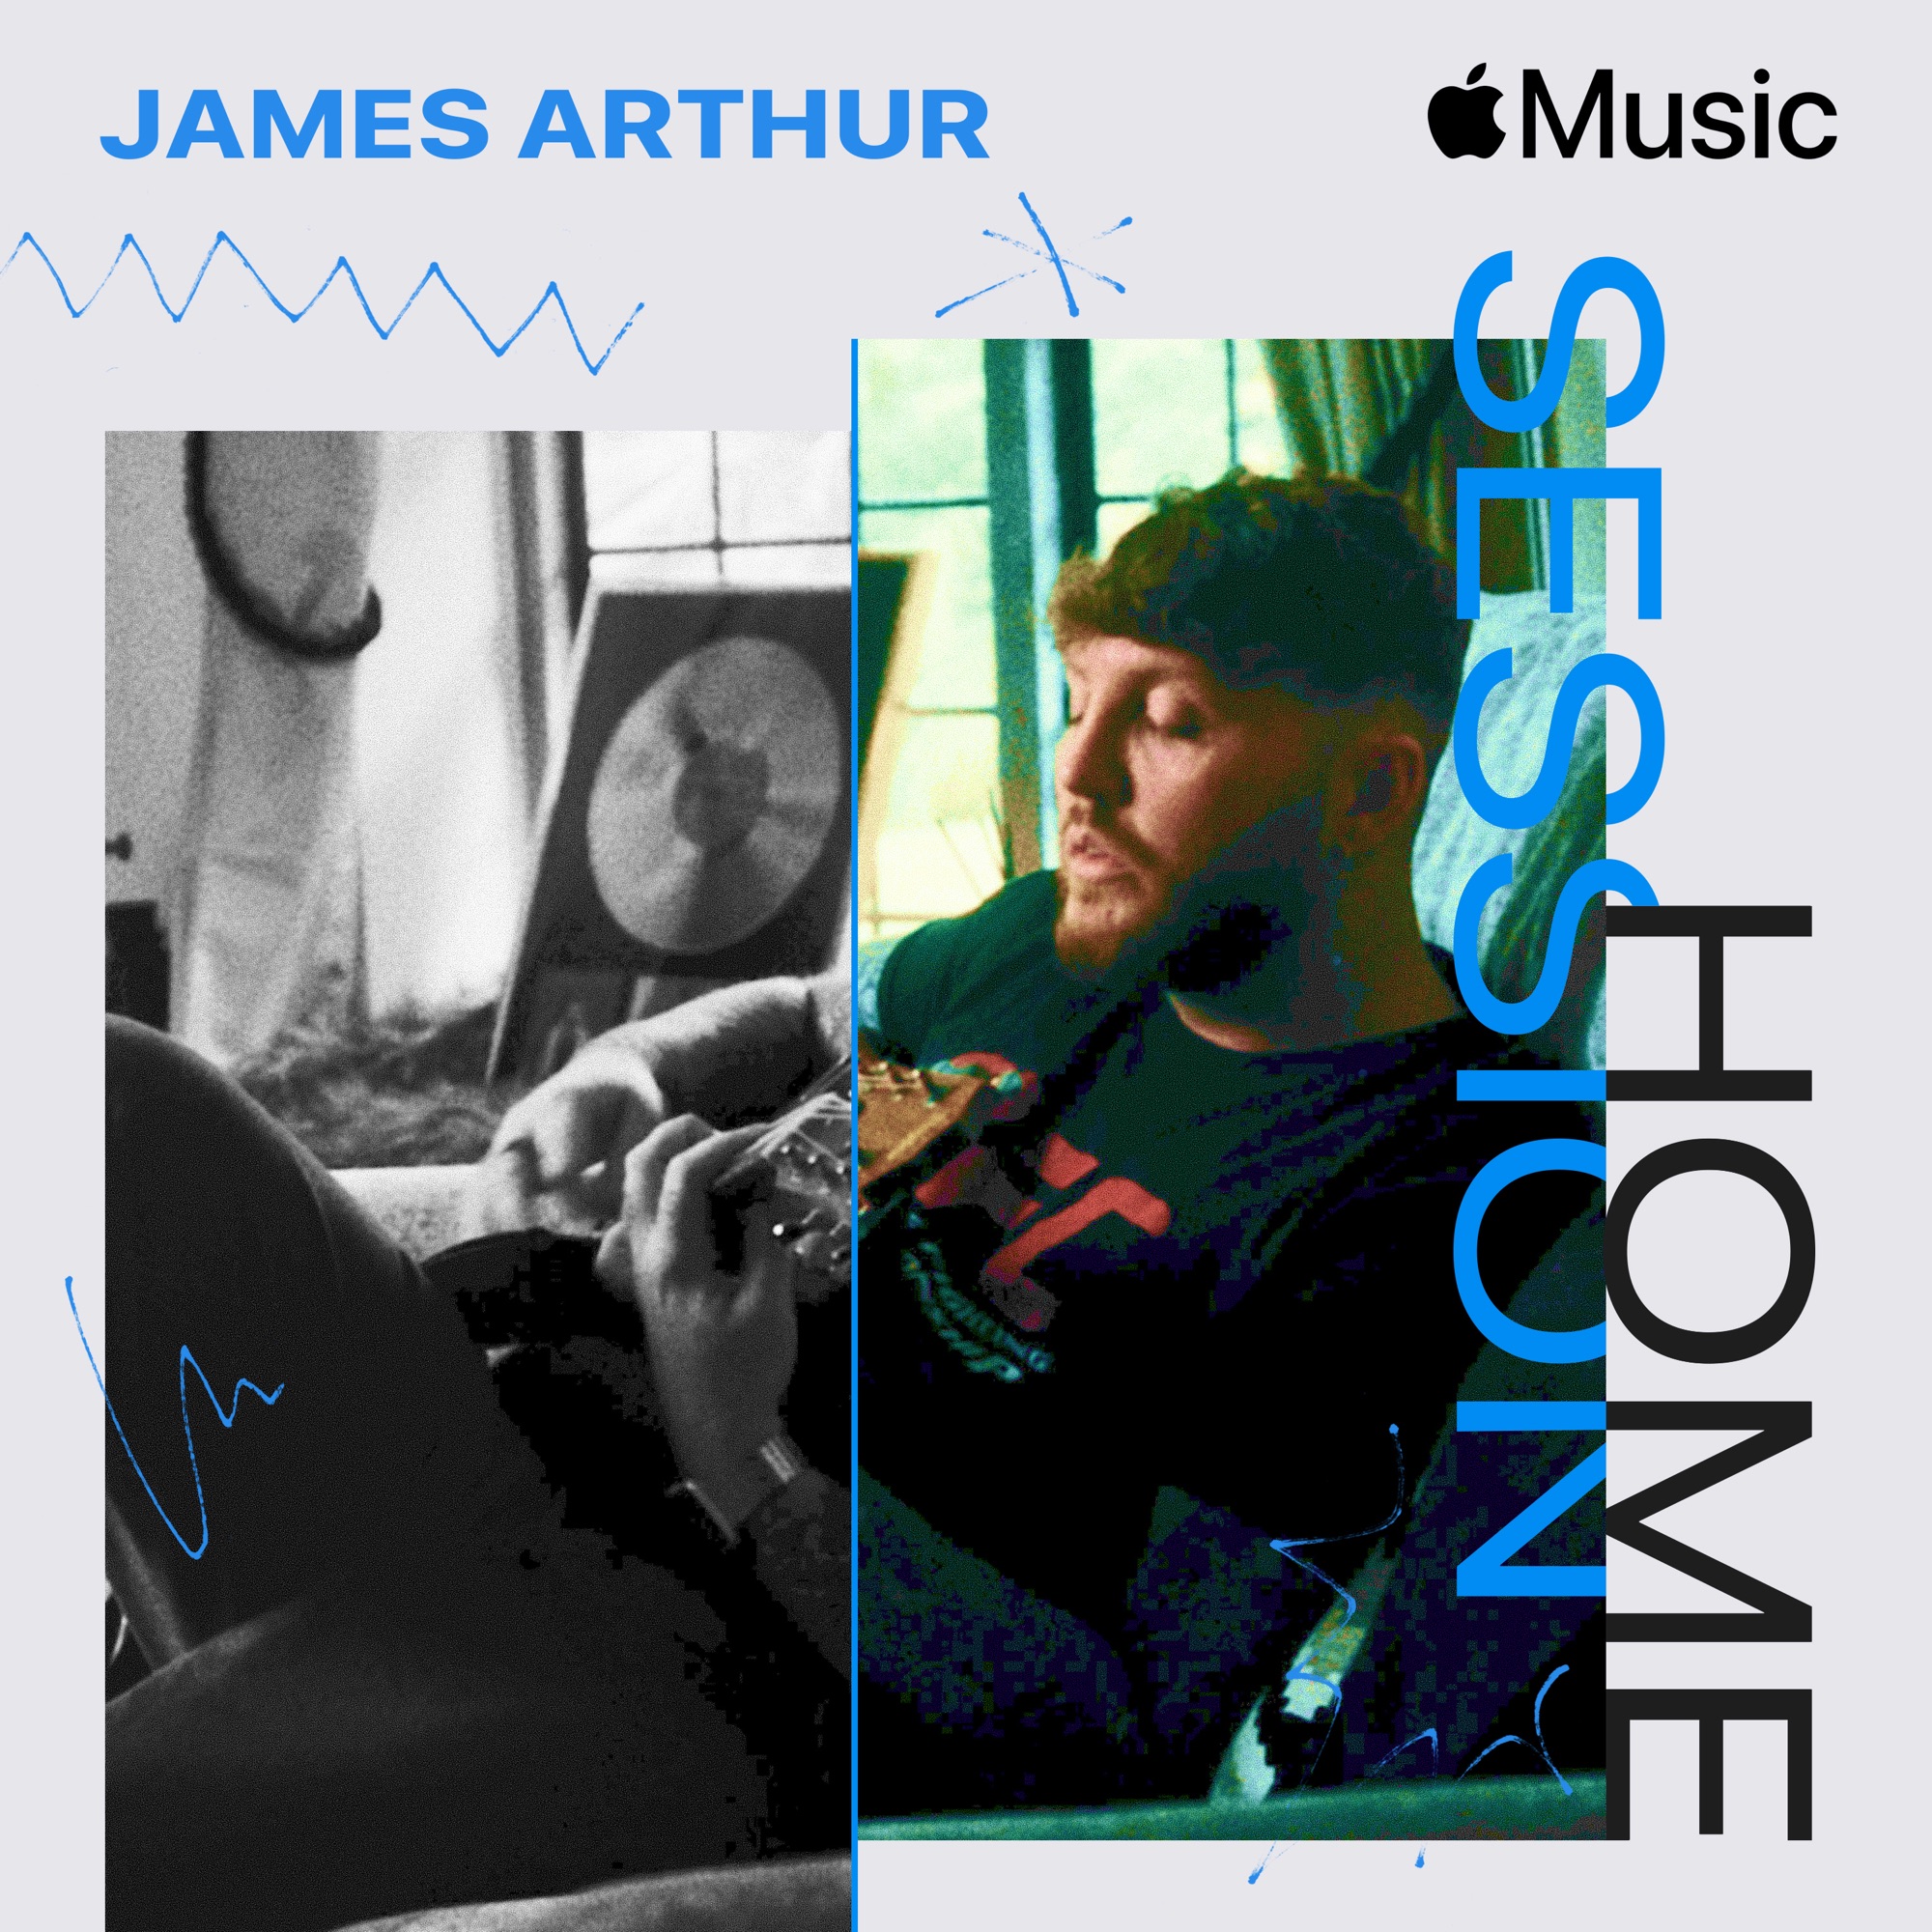 James Arthur - Apple Music Home Session: James Arthur - Single